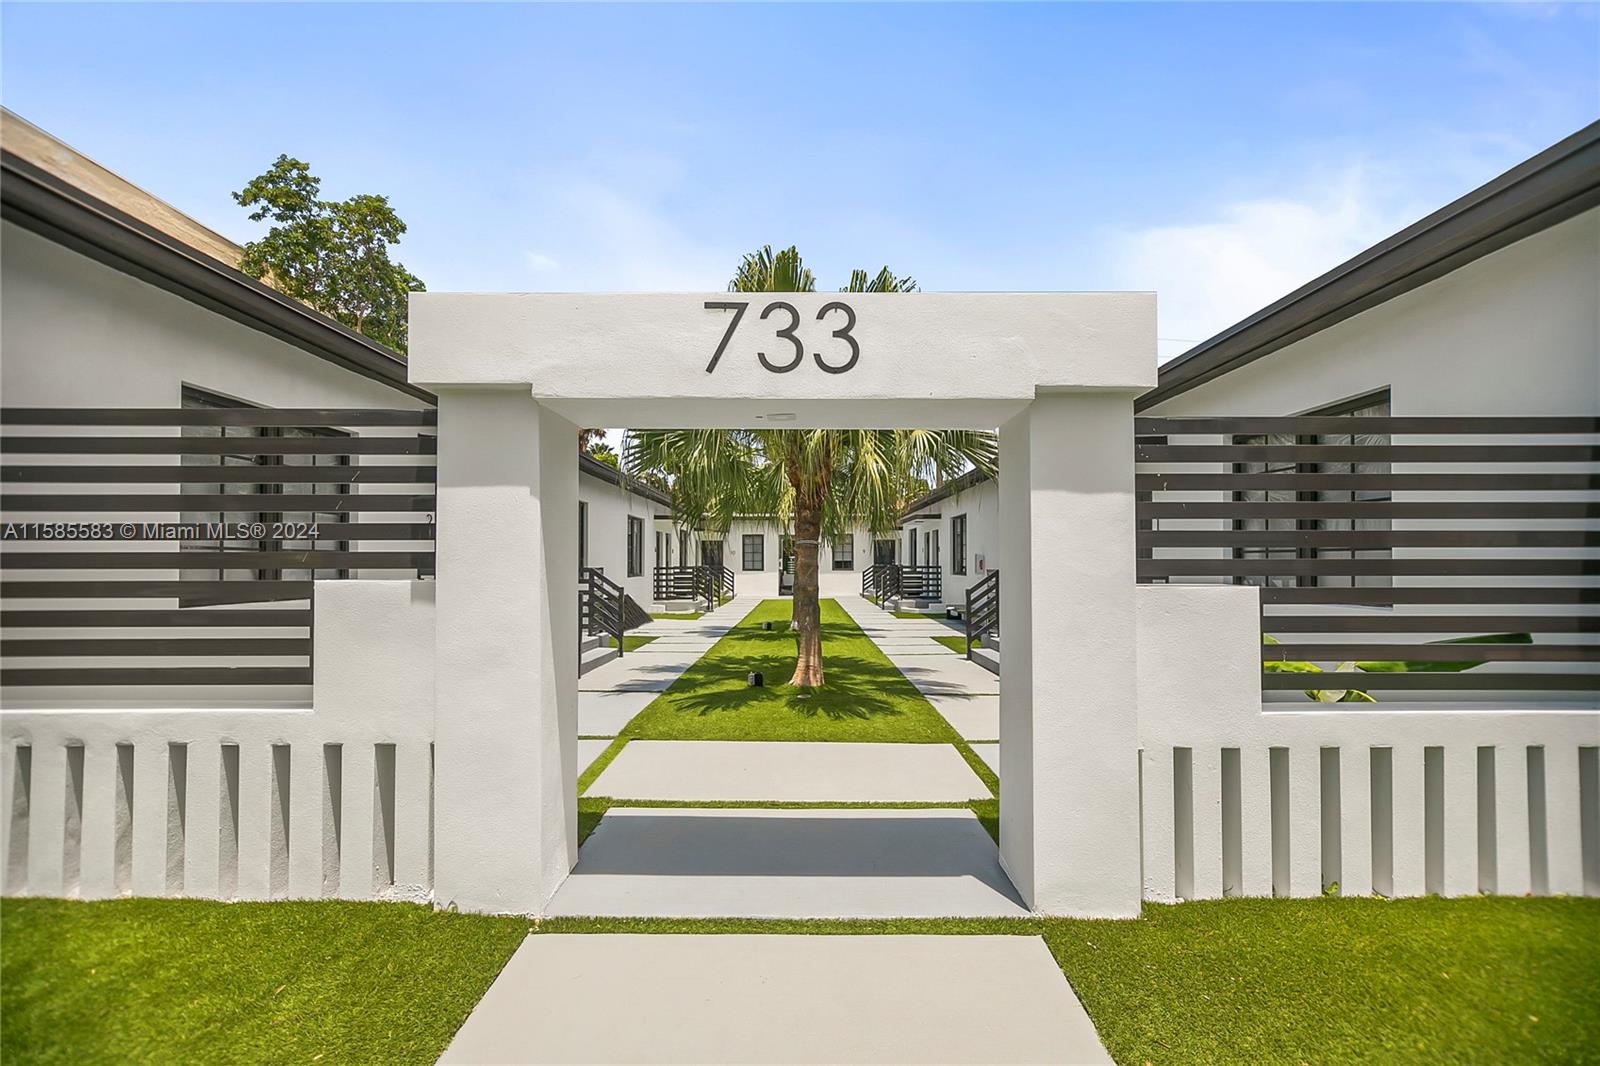 Rental Property at 733 Michigan Ave 9, Miami Beach, Miami-Dade County, Florida - Bedrooms: 3 
Bathrooms: 2  - $4,300 MO.